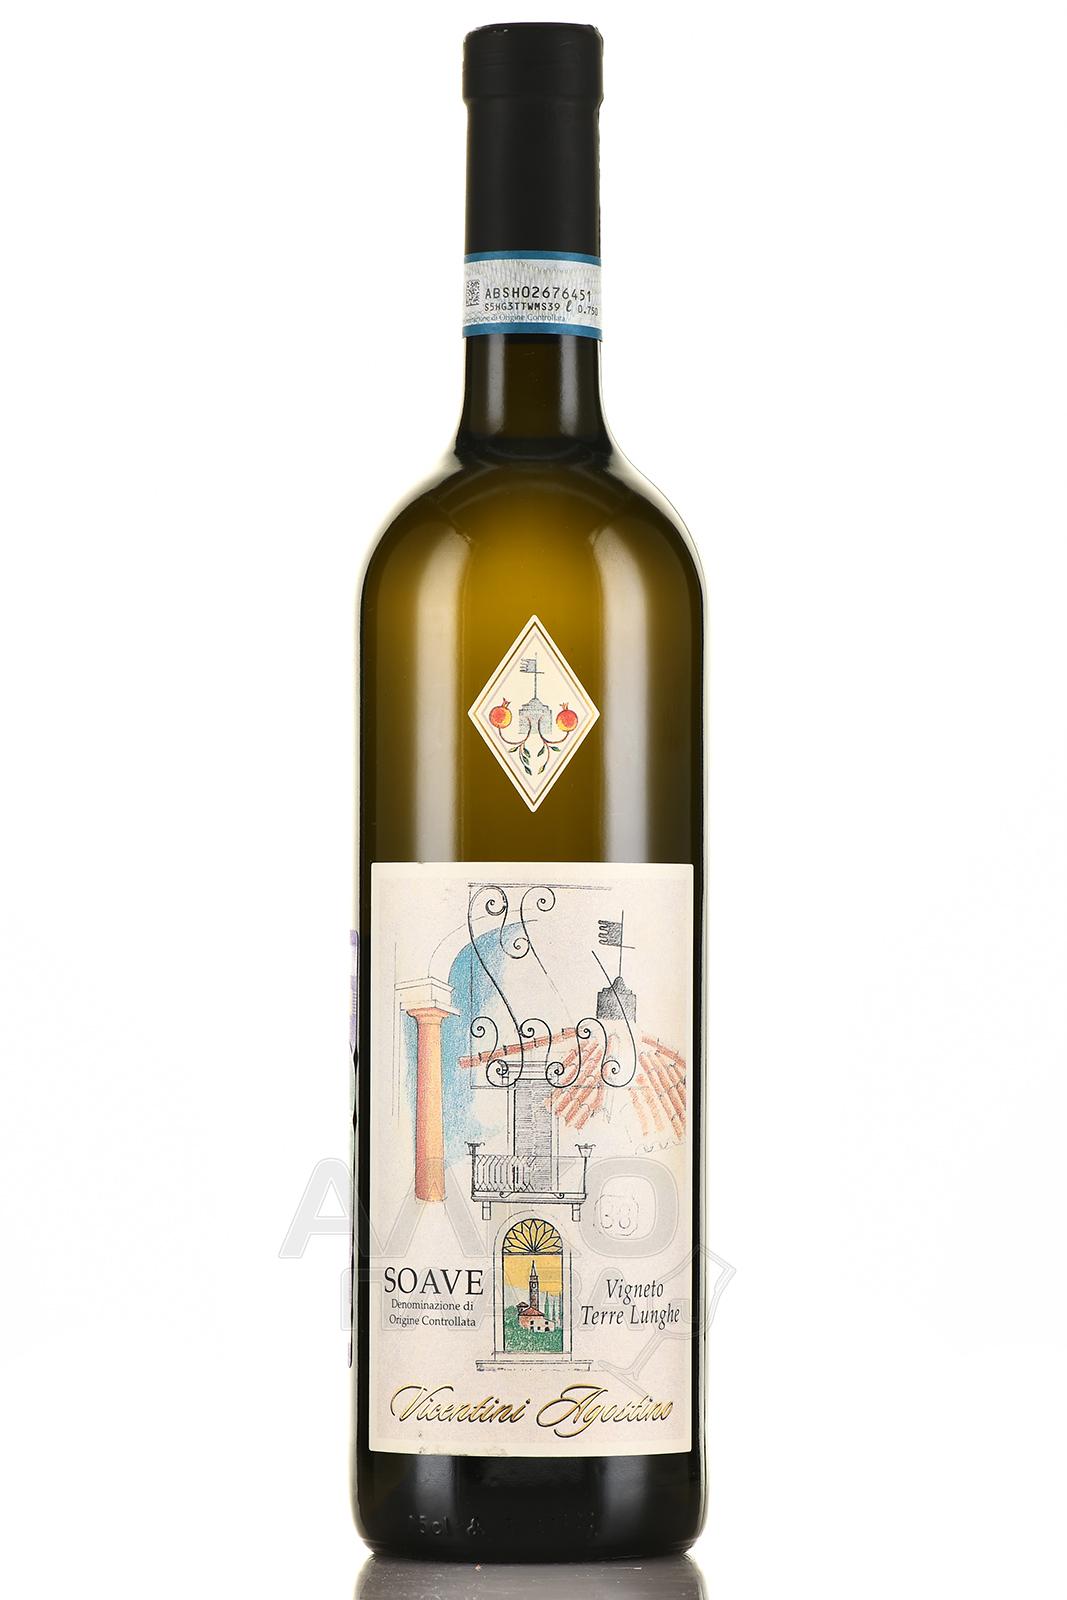 Vicentini Agostino Soave Vigneto Terre Lunghe - вино Вичентини Агостино Соаве Виньето Терре Лунге 0.75 л белое сухое